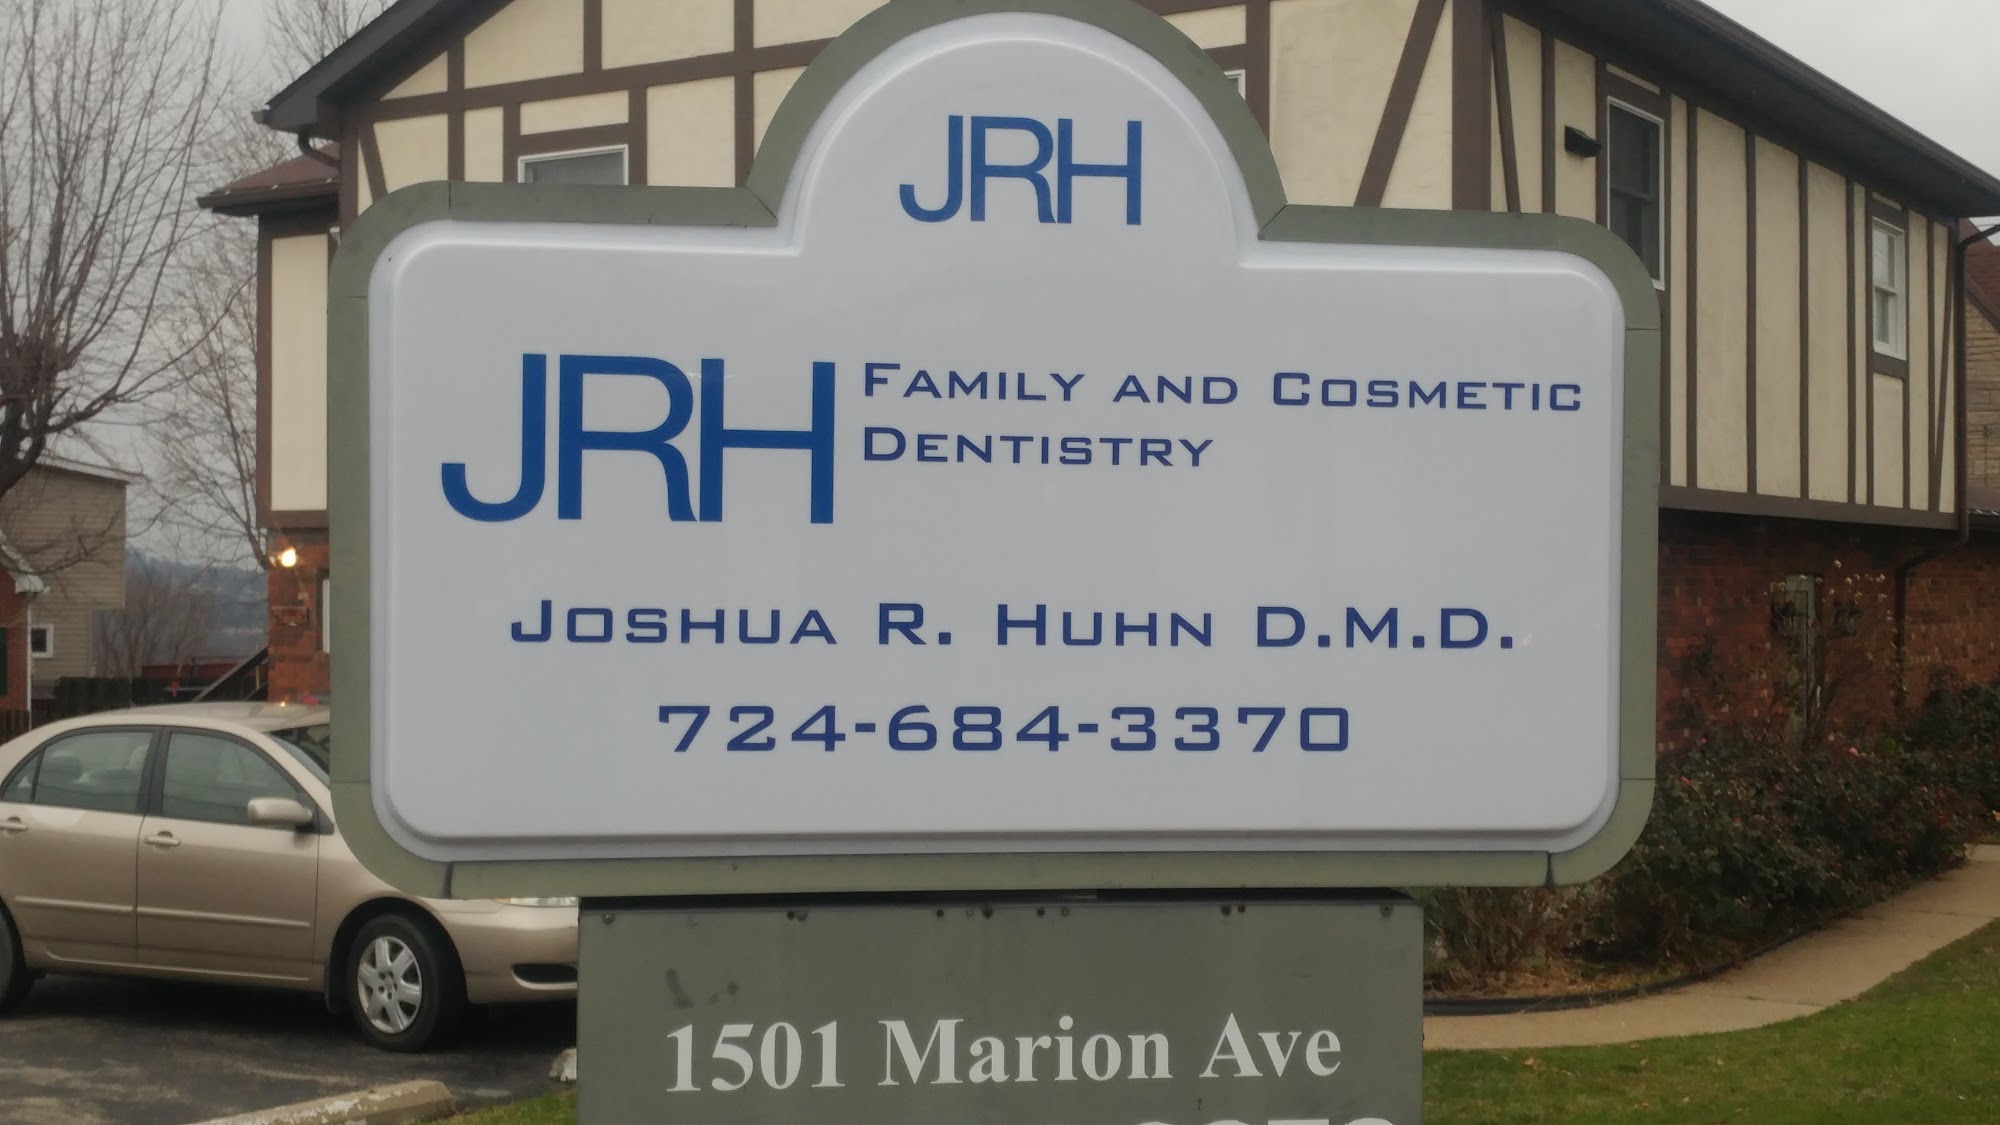 Joshua R Huhn DMD 1501 Marion Ave, Monessen Pennsylvania 15062